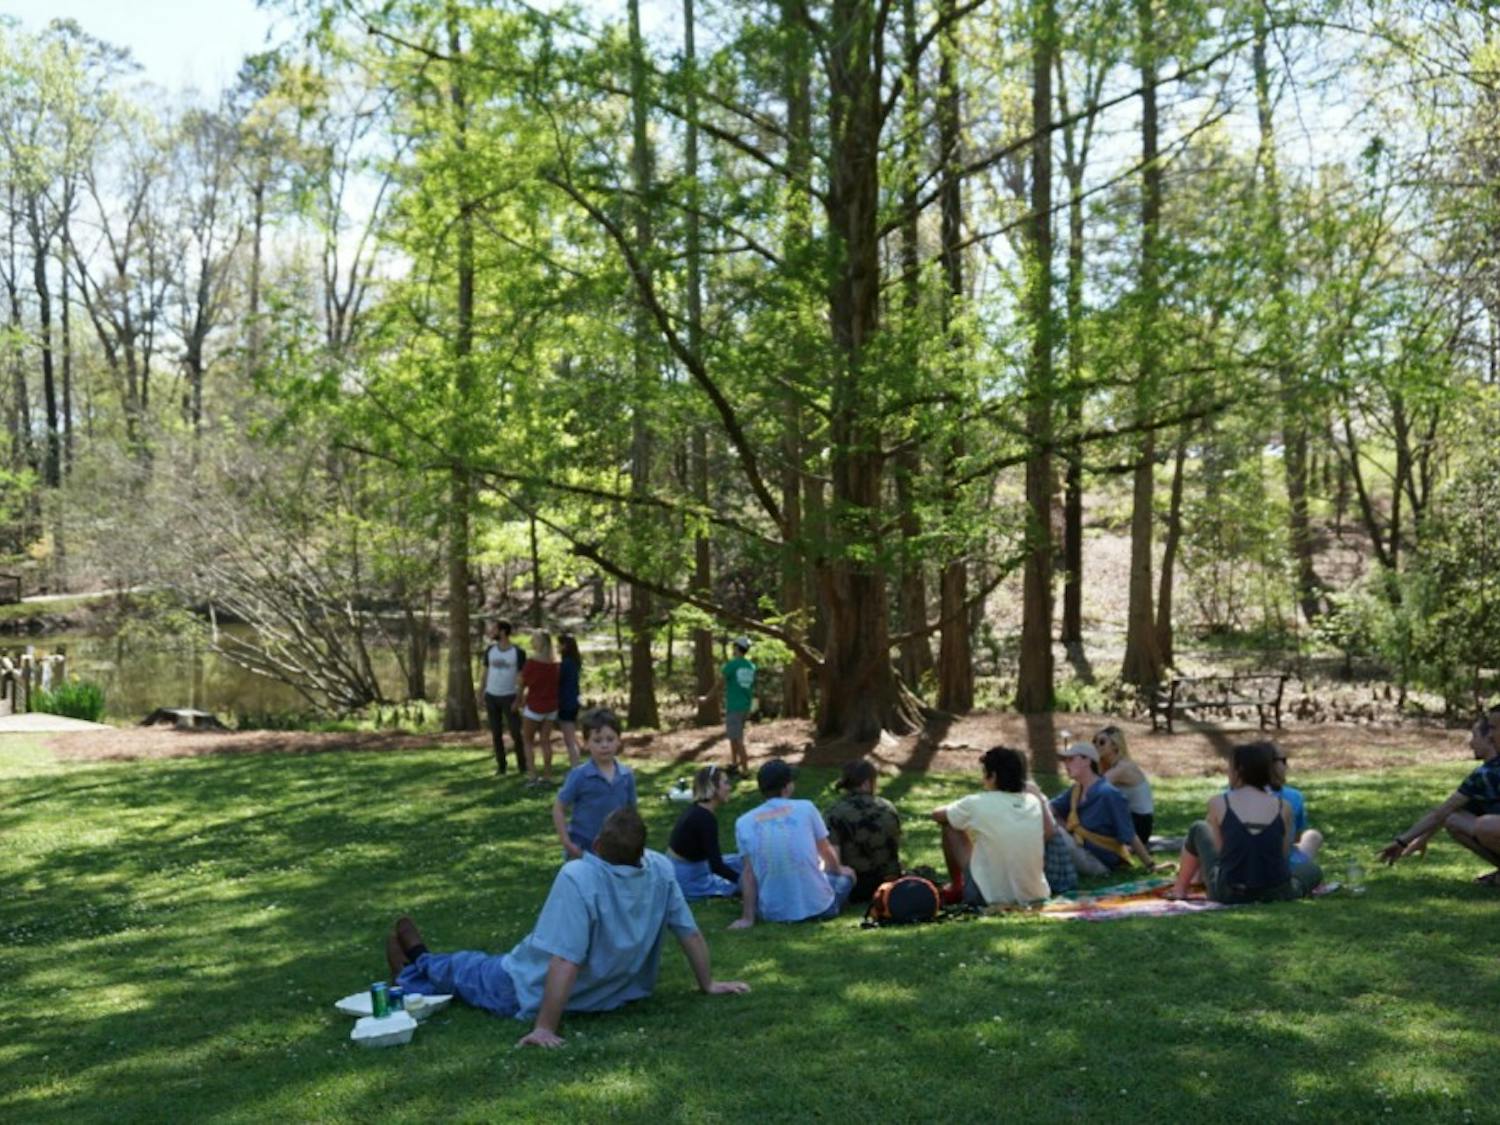 Attendees listen to live music during&nbsp;the Azalea Festival at Auburn University's Donald E. Davis Arboretum on Saturday, March 31, 2018, in Auburn, Ala.